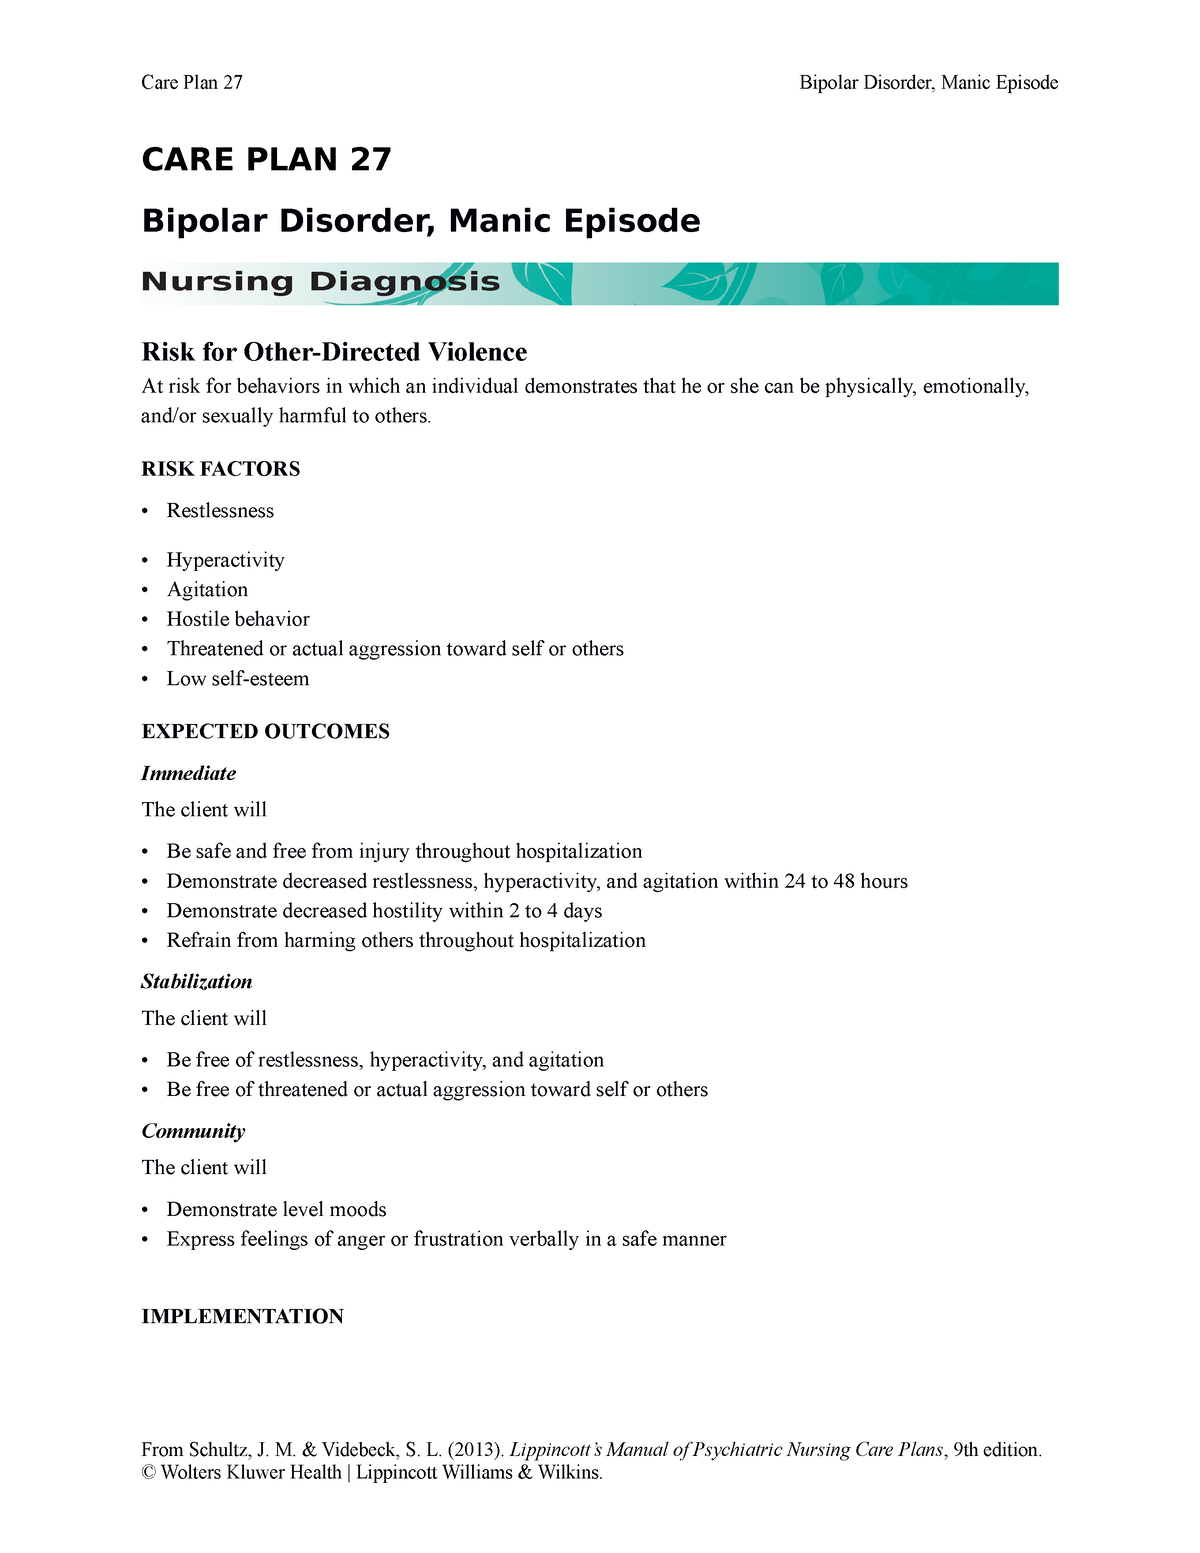 Bipolar disorder psych Care Plan notes CARE PLAN 27 Bipolar Disorder